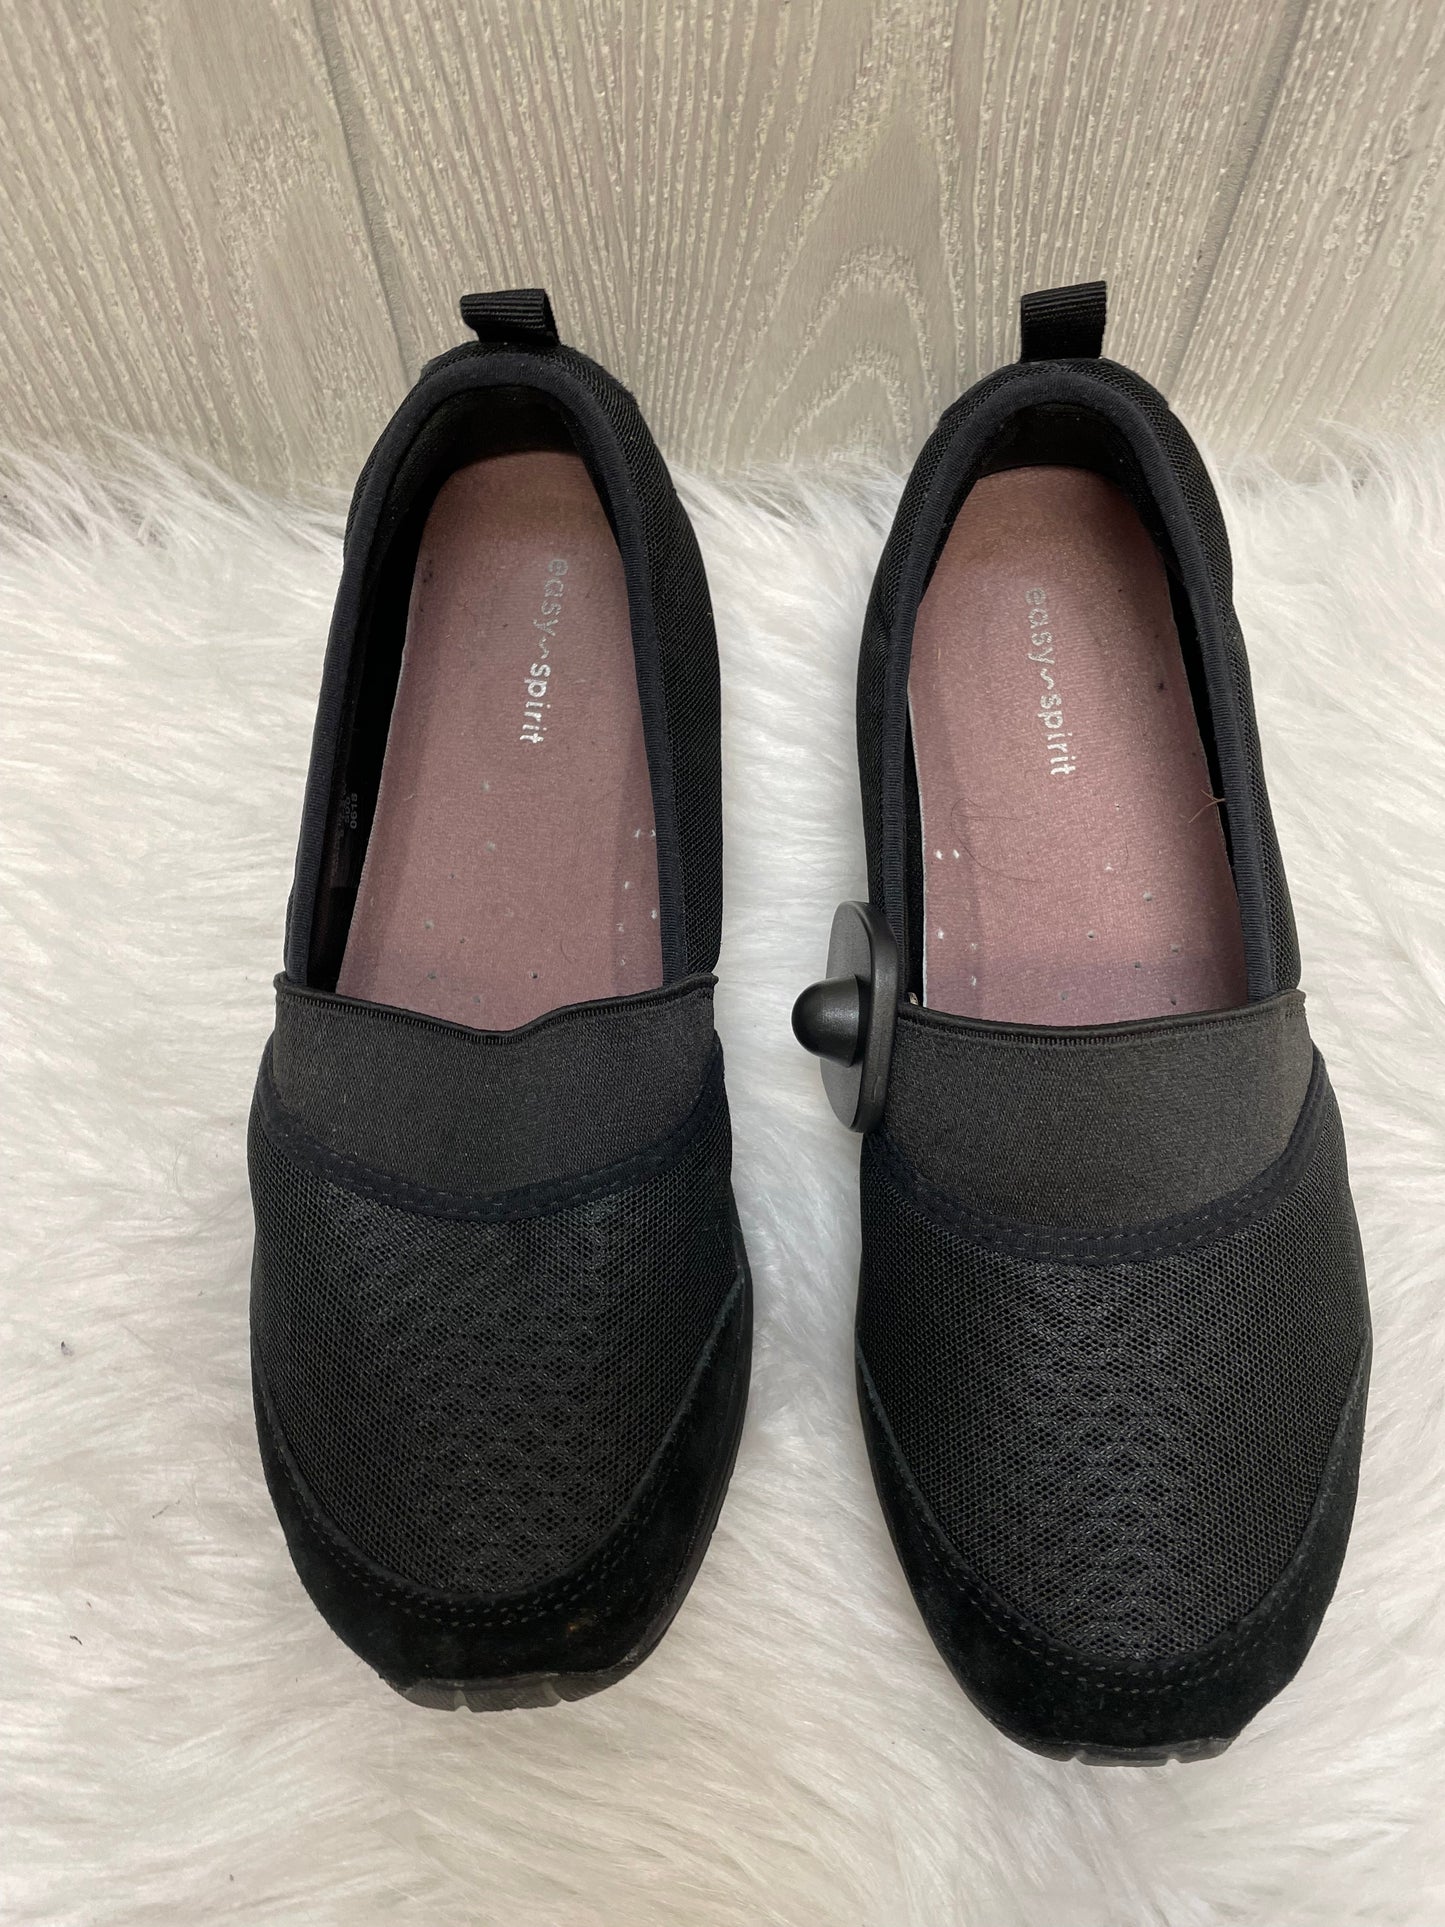 Black Shoes Flats Easy Spirit, Size 8.5